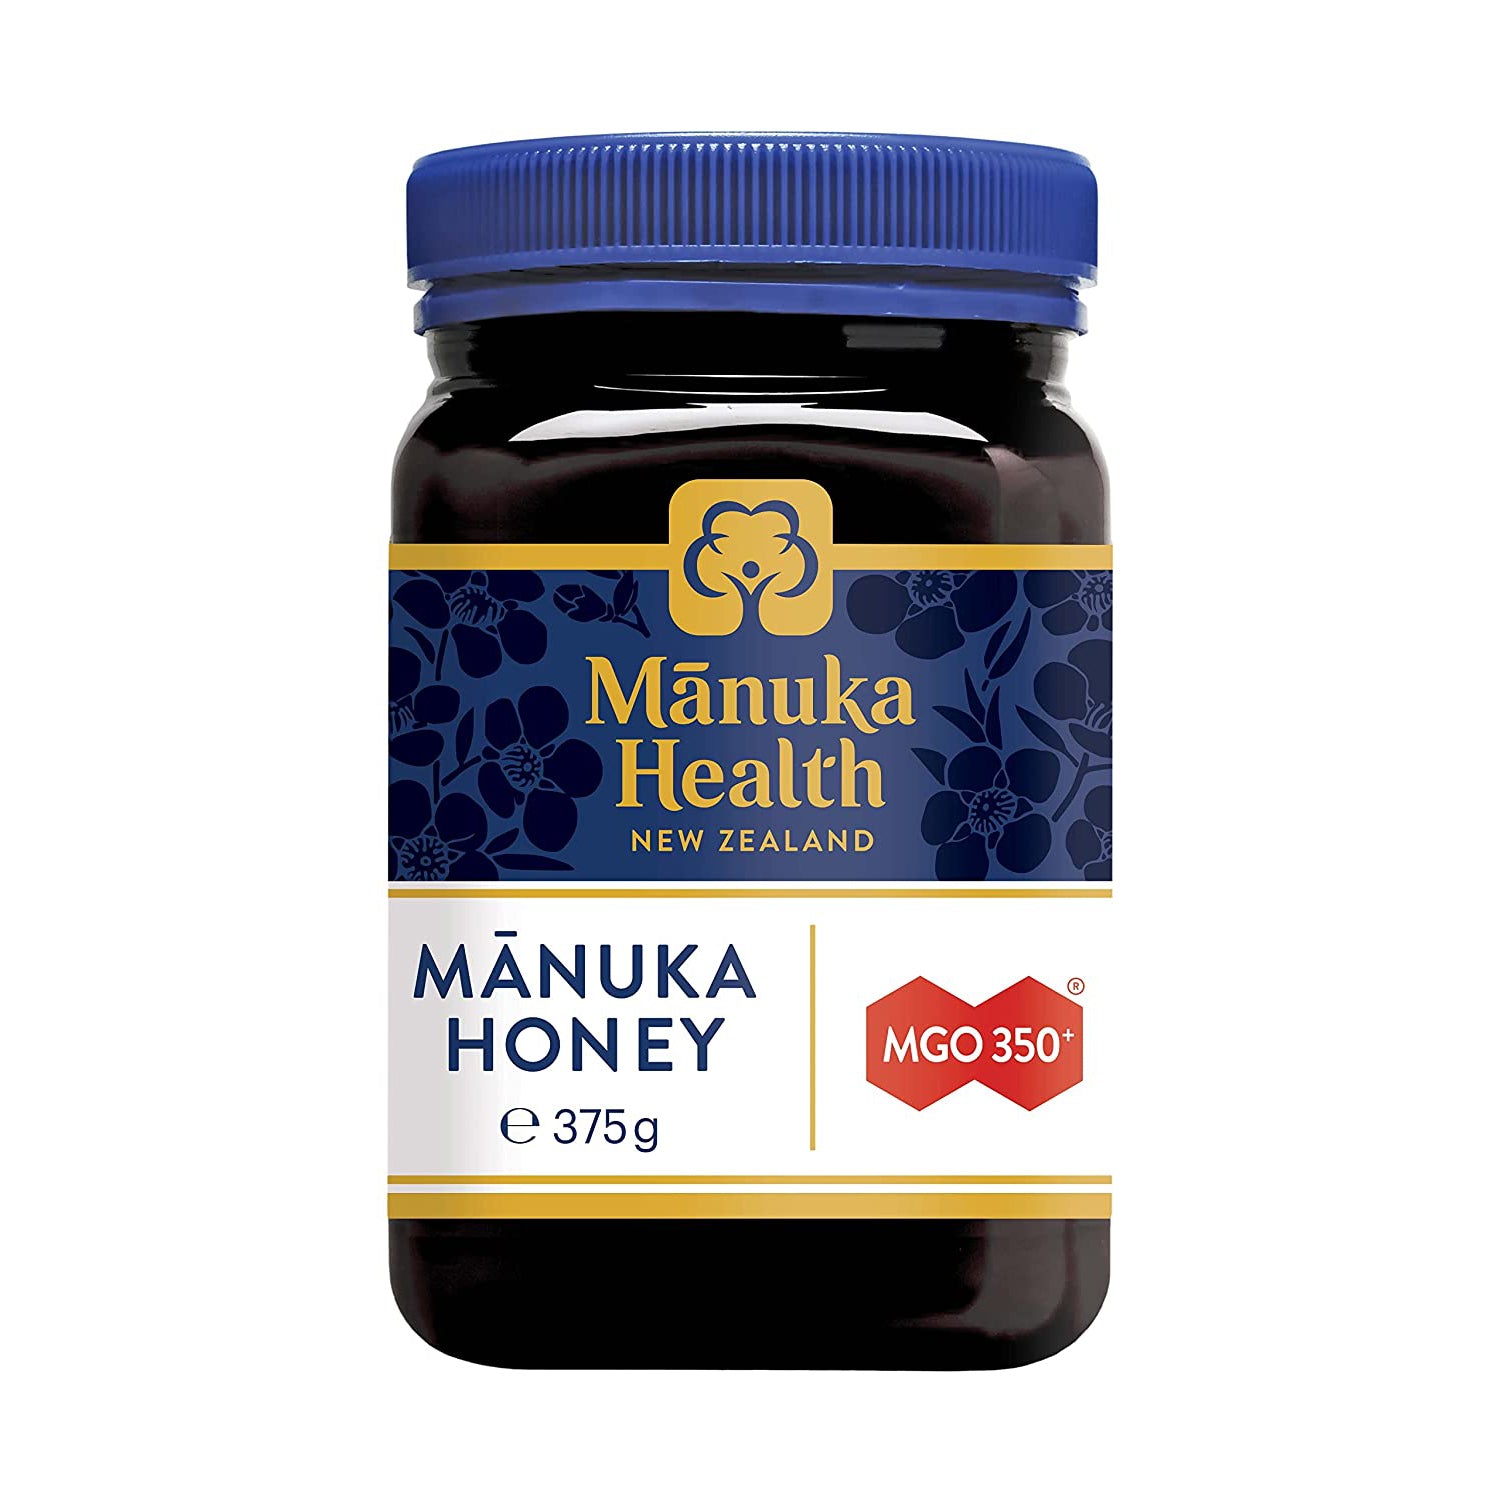 Manuka Health - Manuka Honig MGO 350+, 375g Honigglas vorne